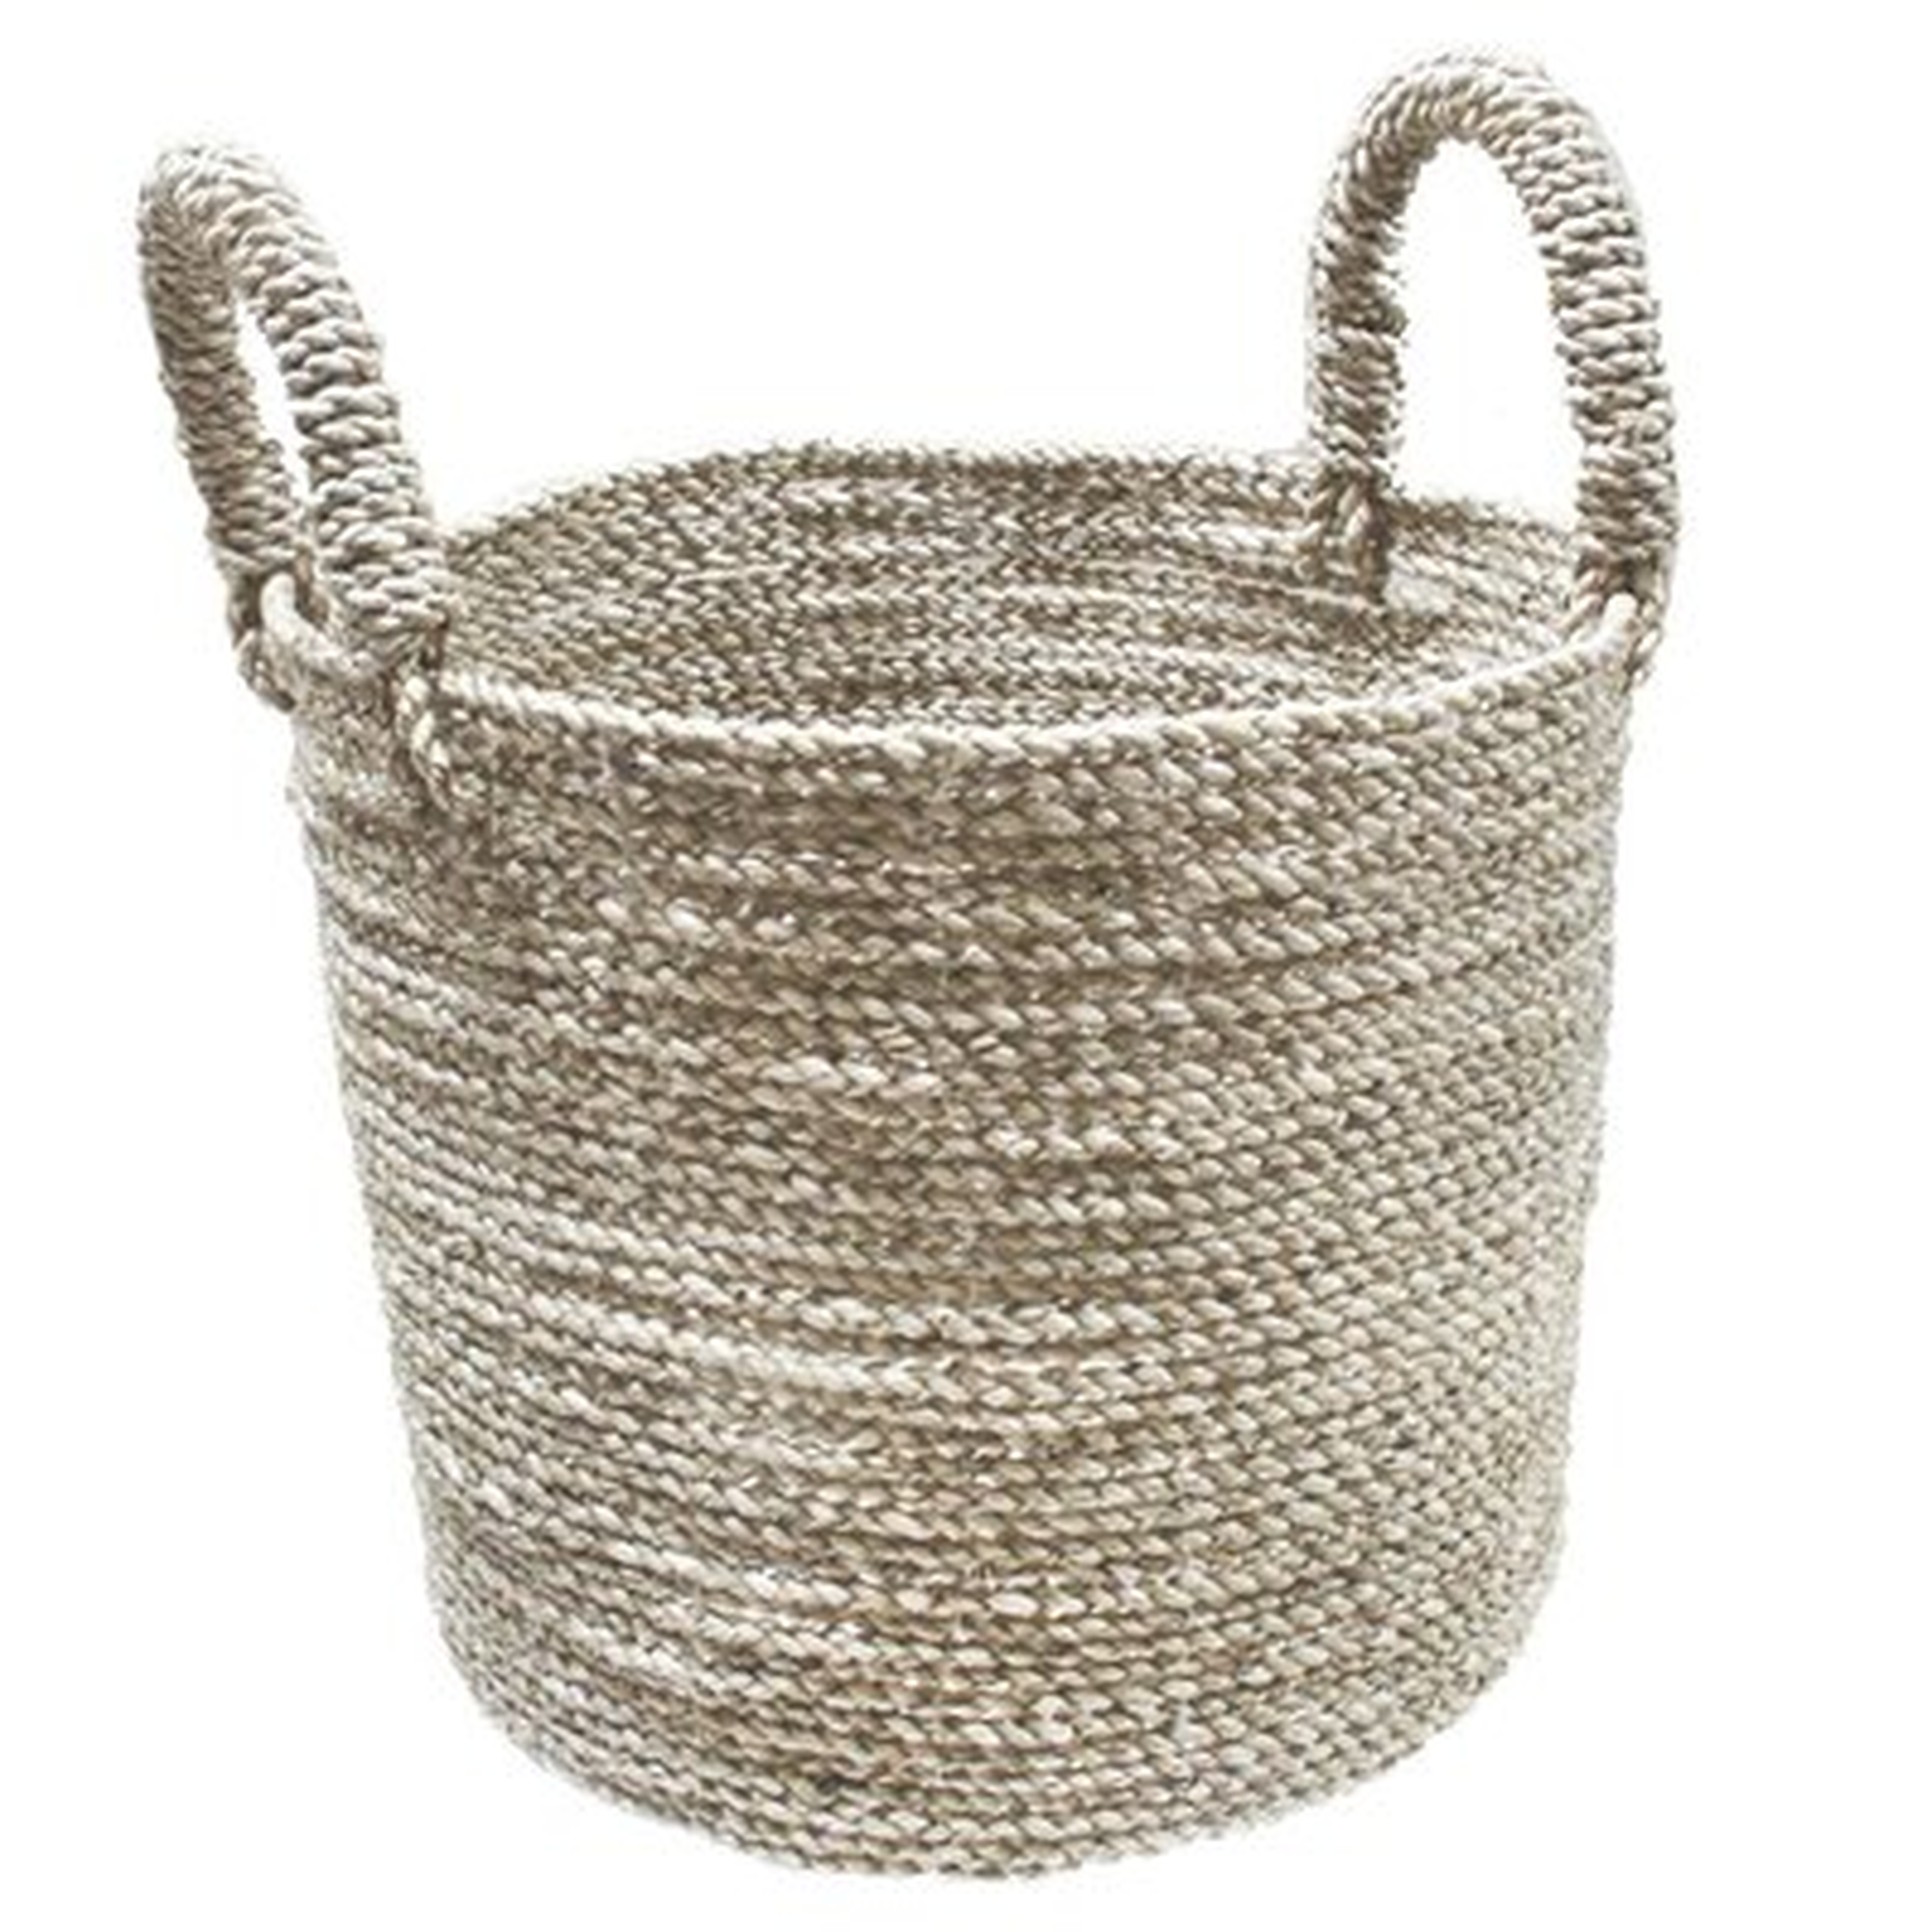 Handwoven Natural Rattan Basket - Wayfair